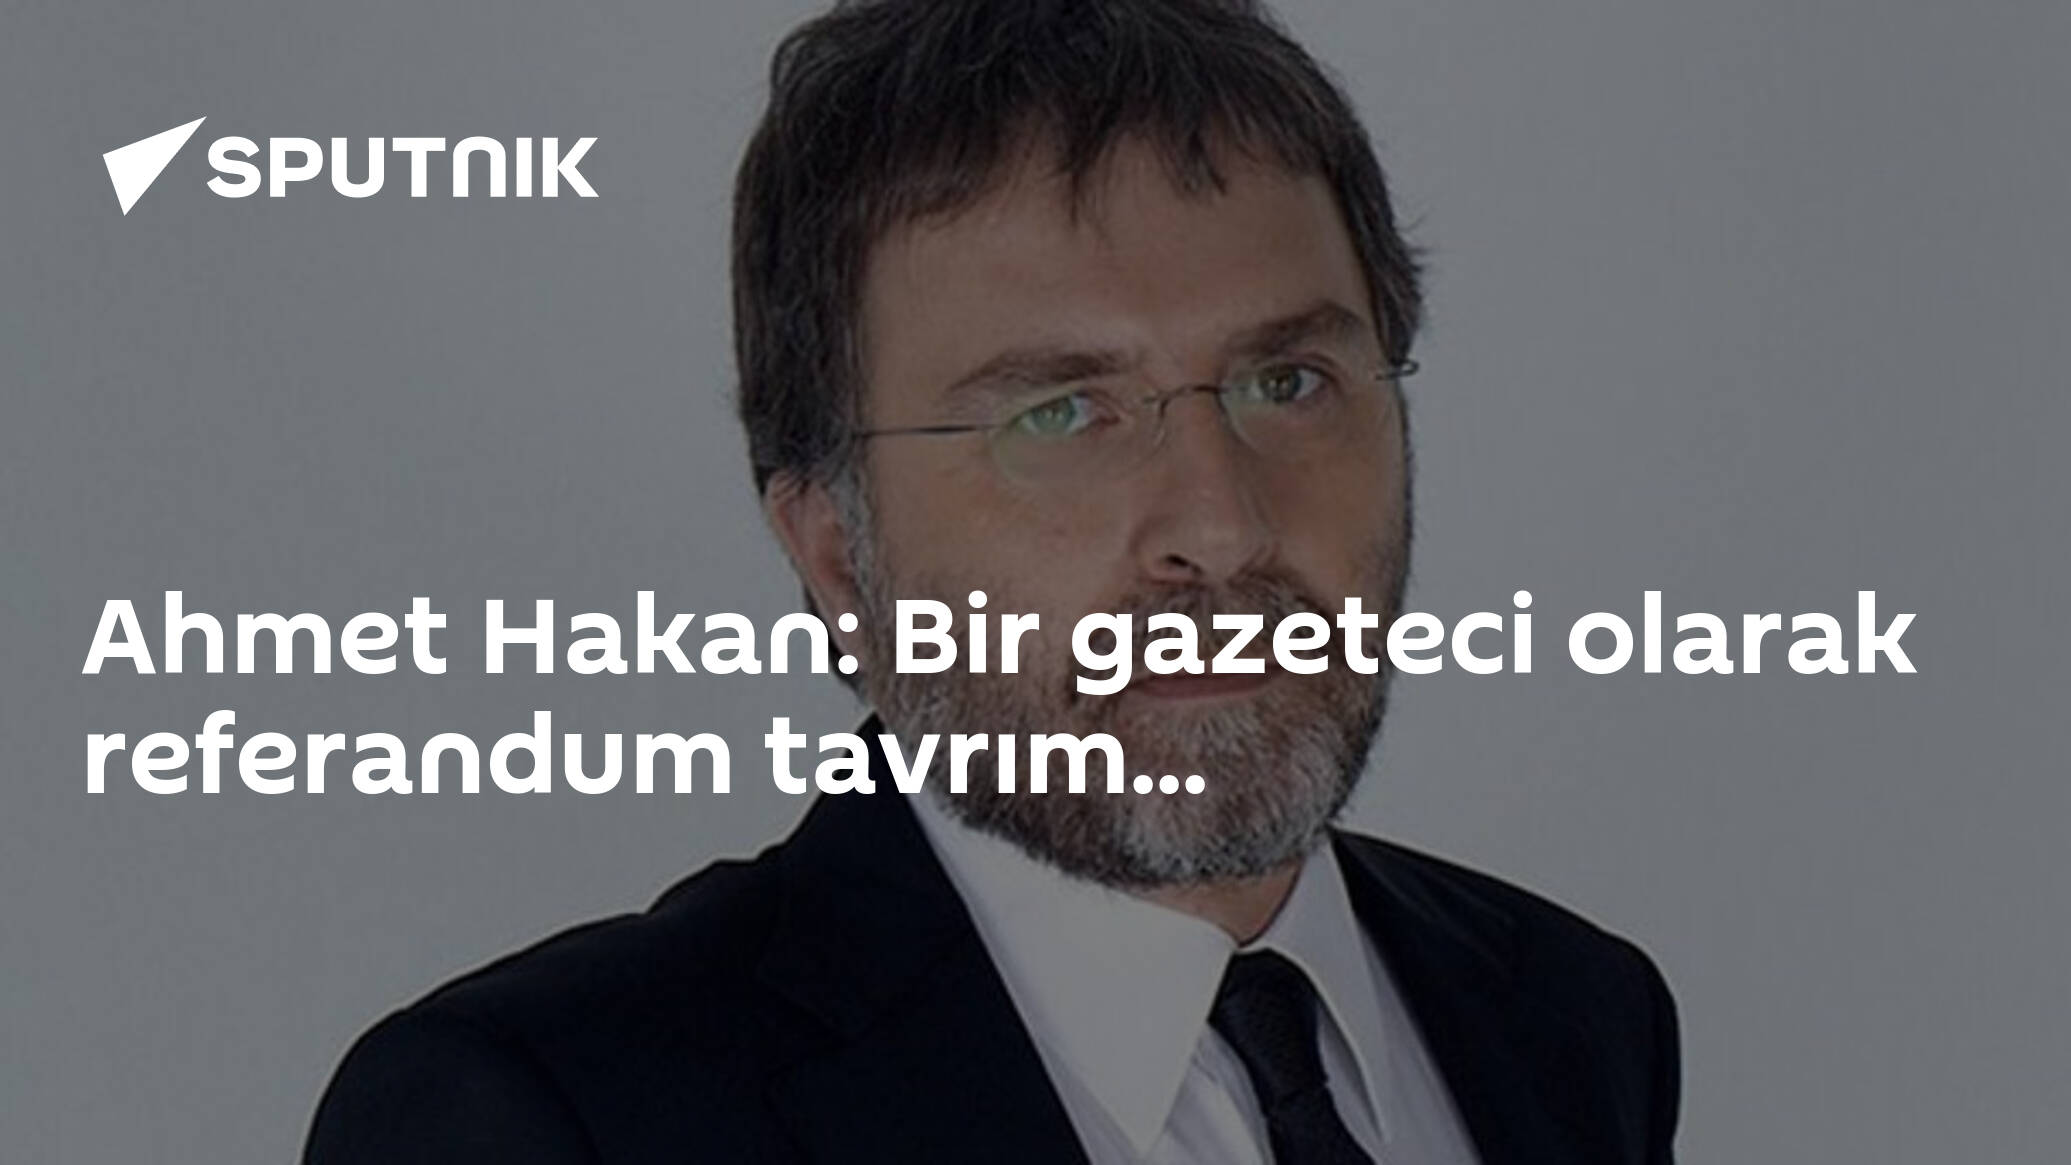 Ahmet Hakan: Bir gazeteci olarak referandum tavrım...